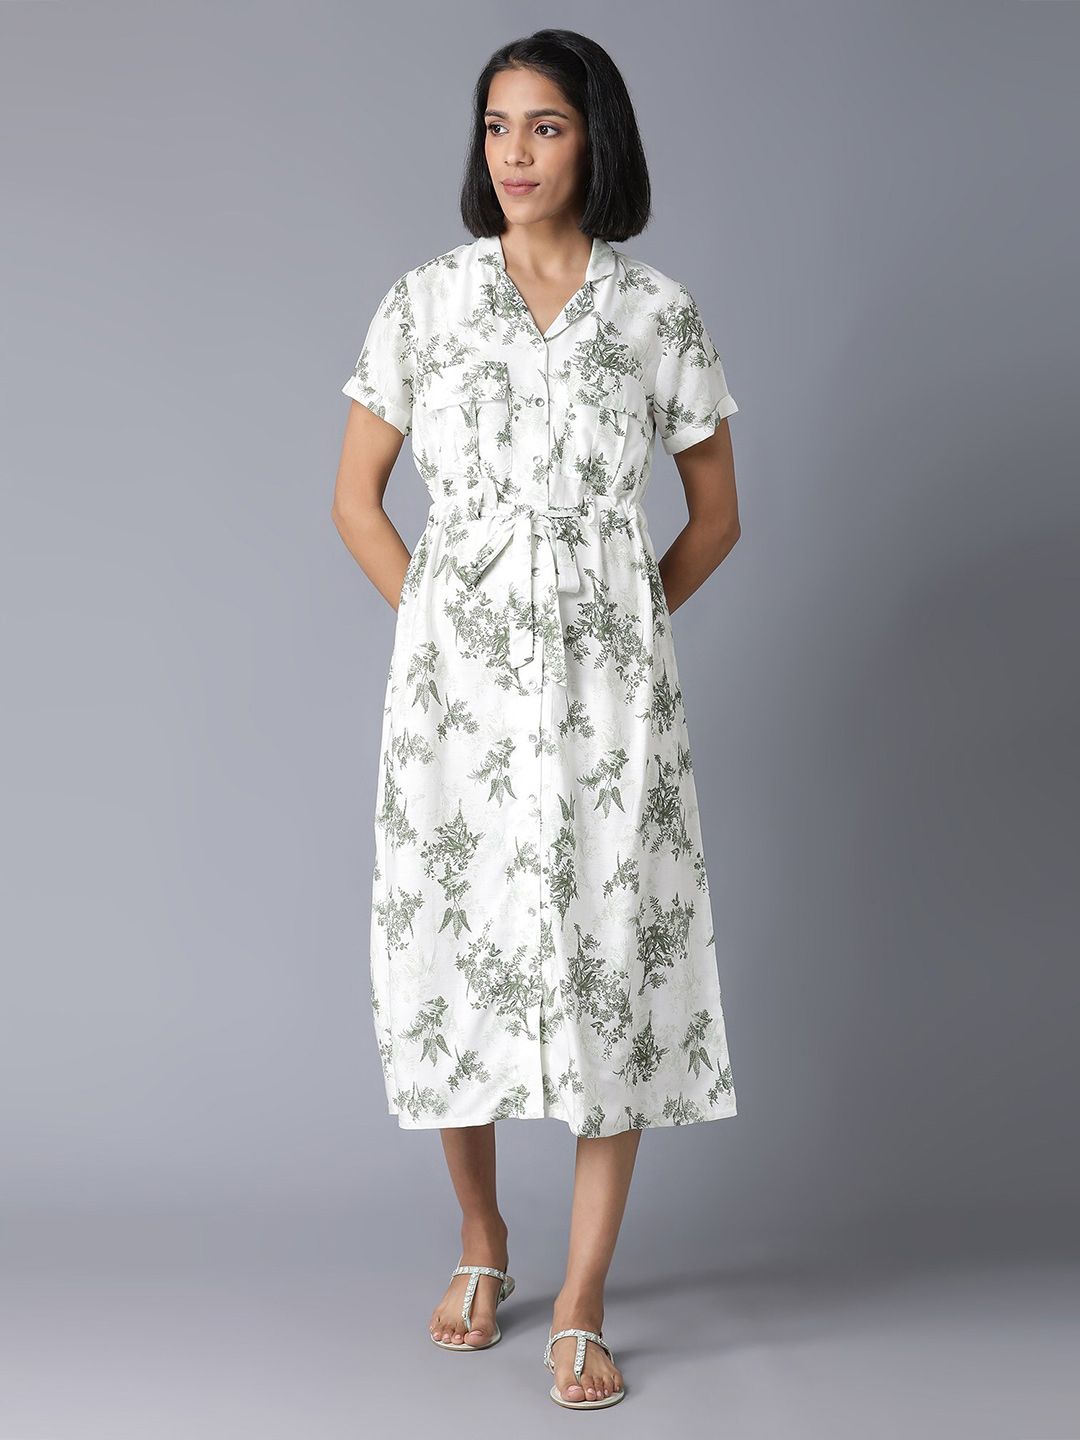 W White Floral Midi Dress Price in India